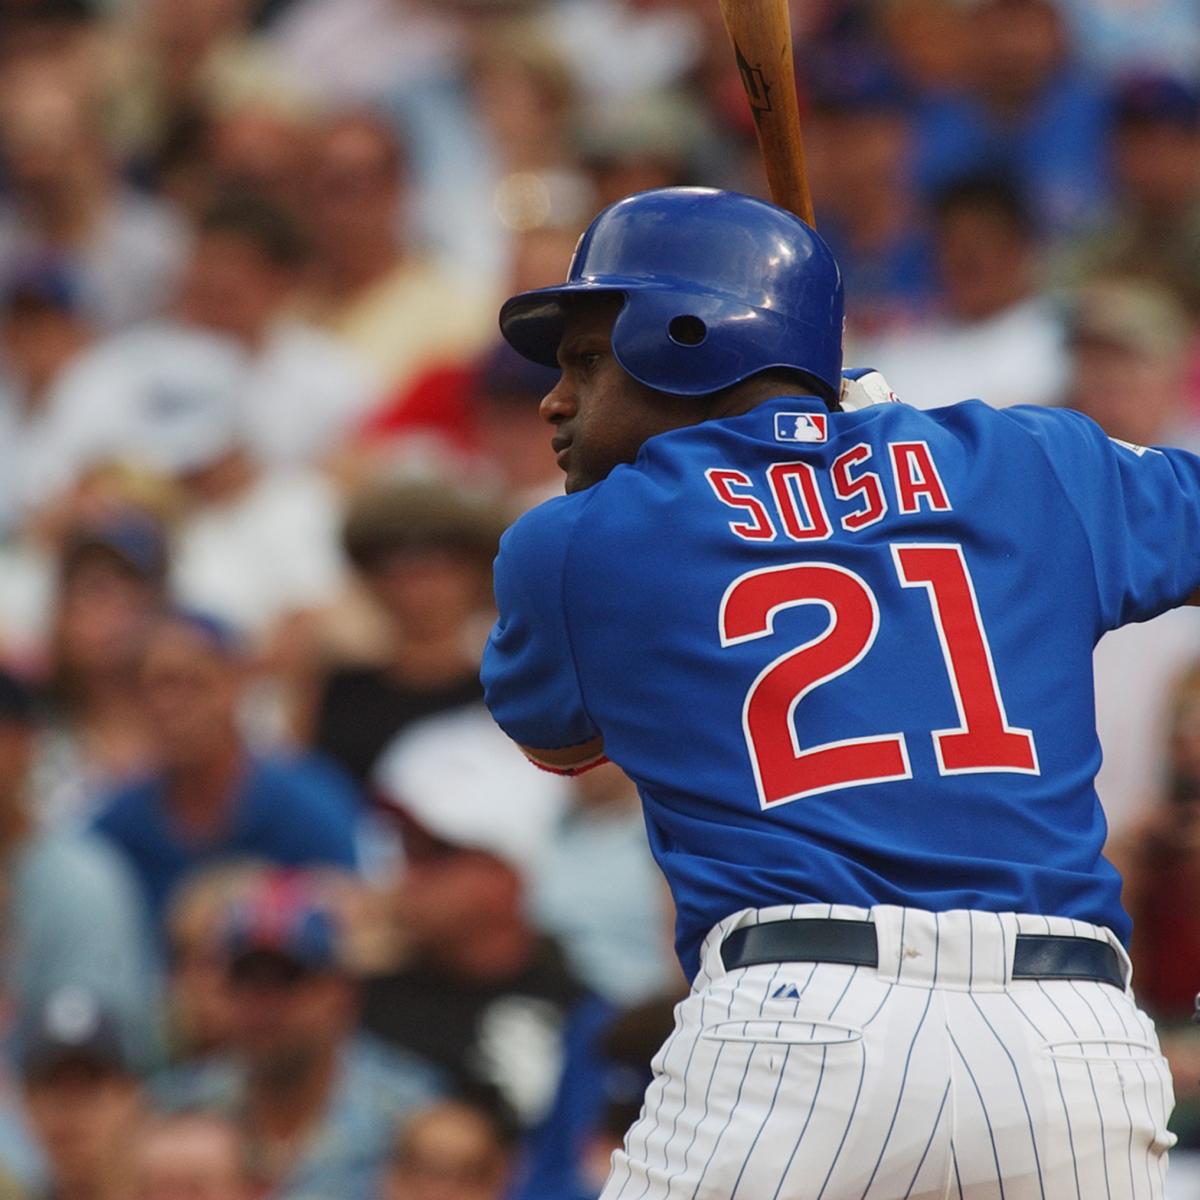 Sammy Sosa: Will former star enter Chicago Cubs Hall of Fame?